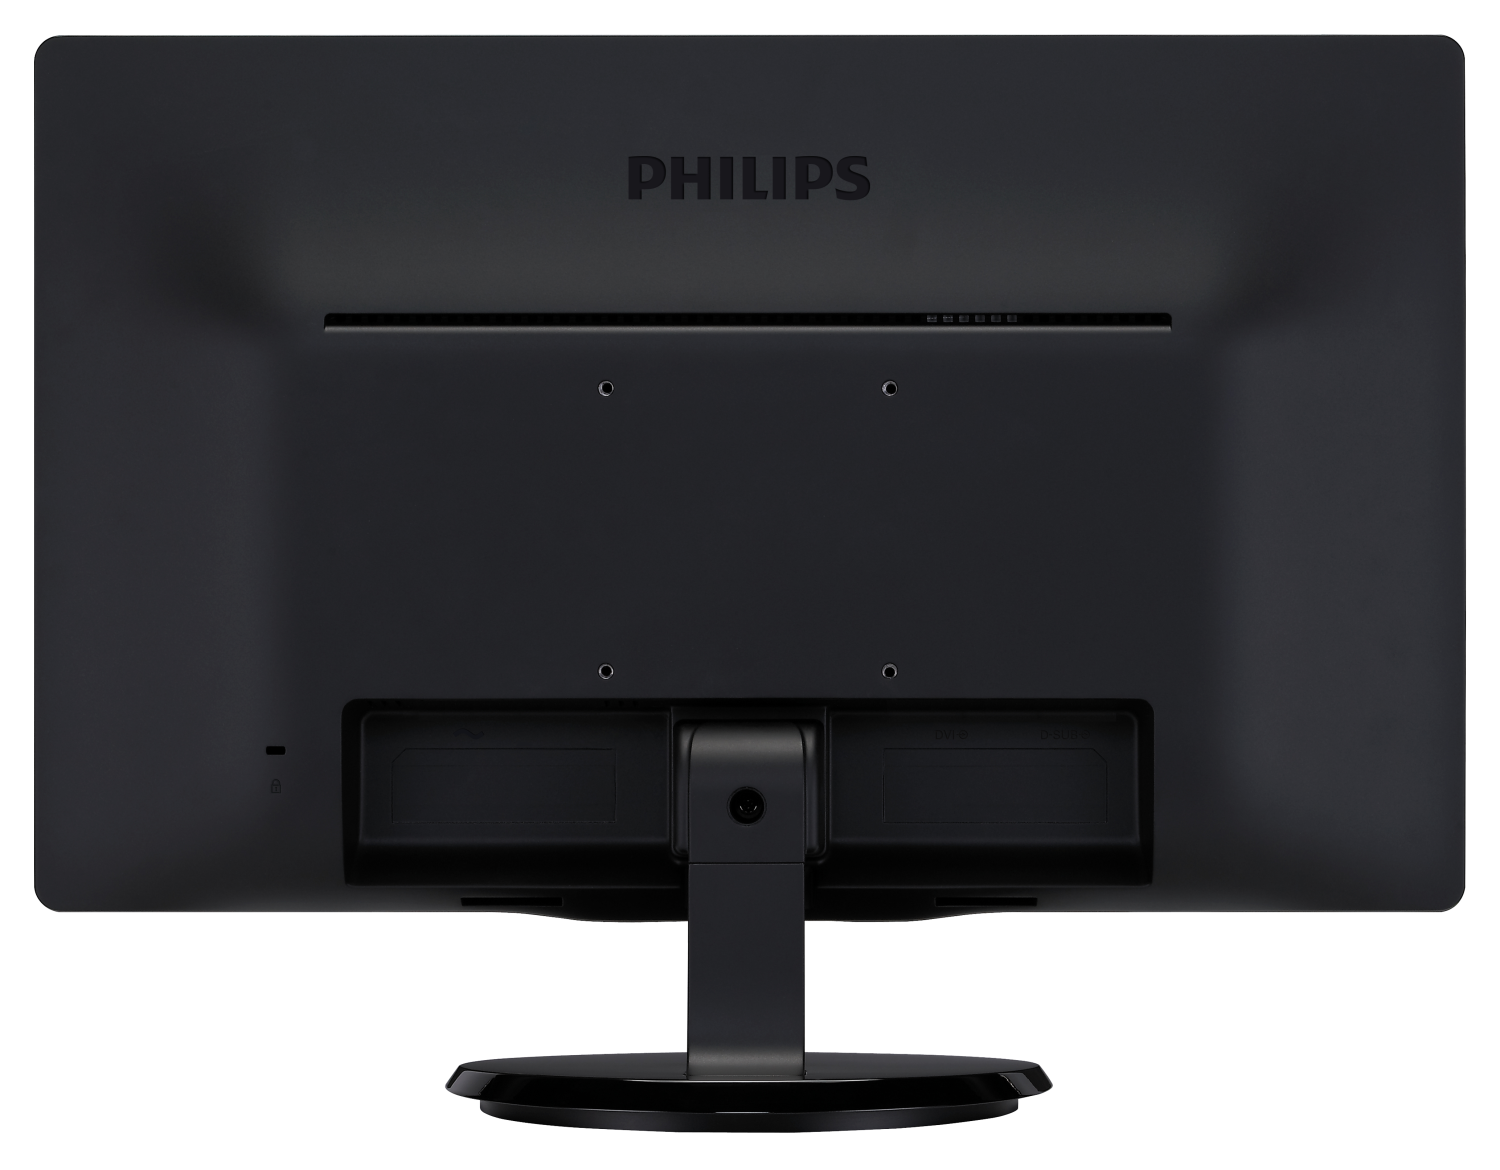 Монитор Philips 23.6